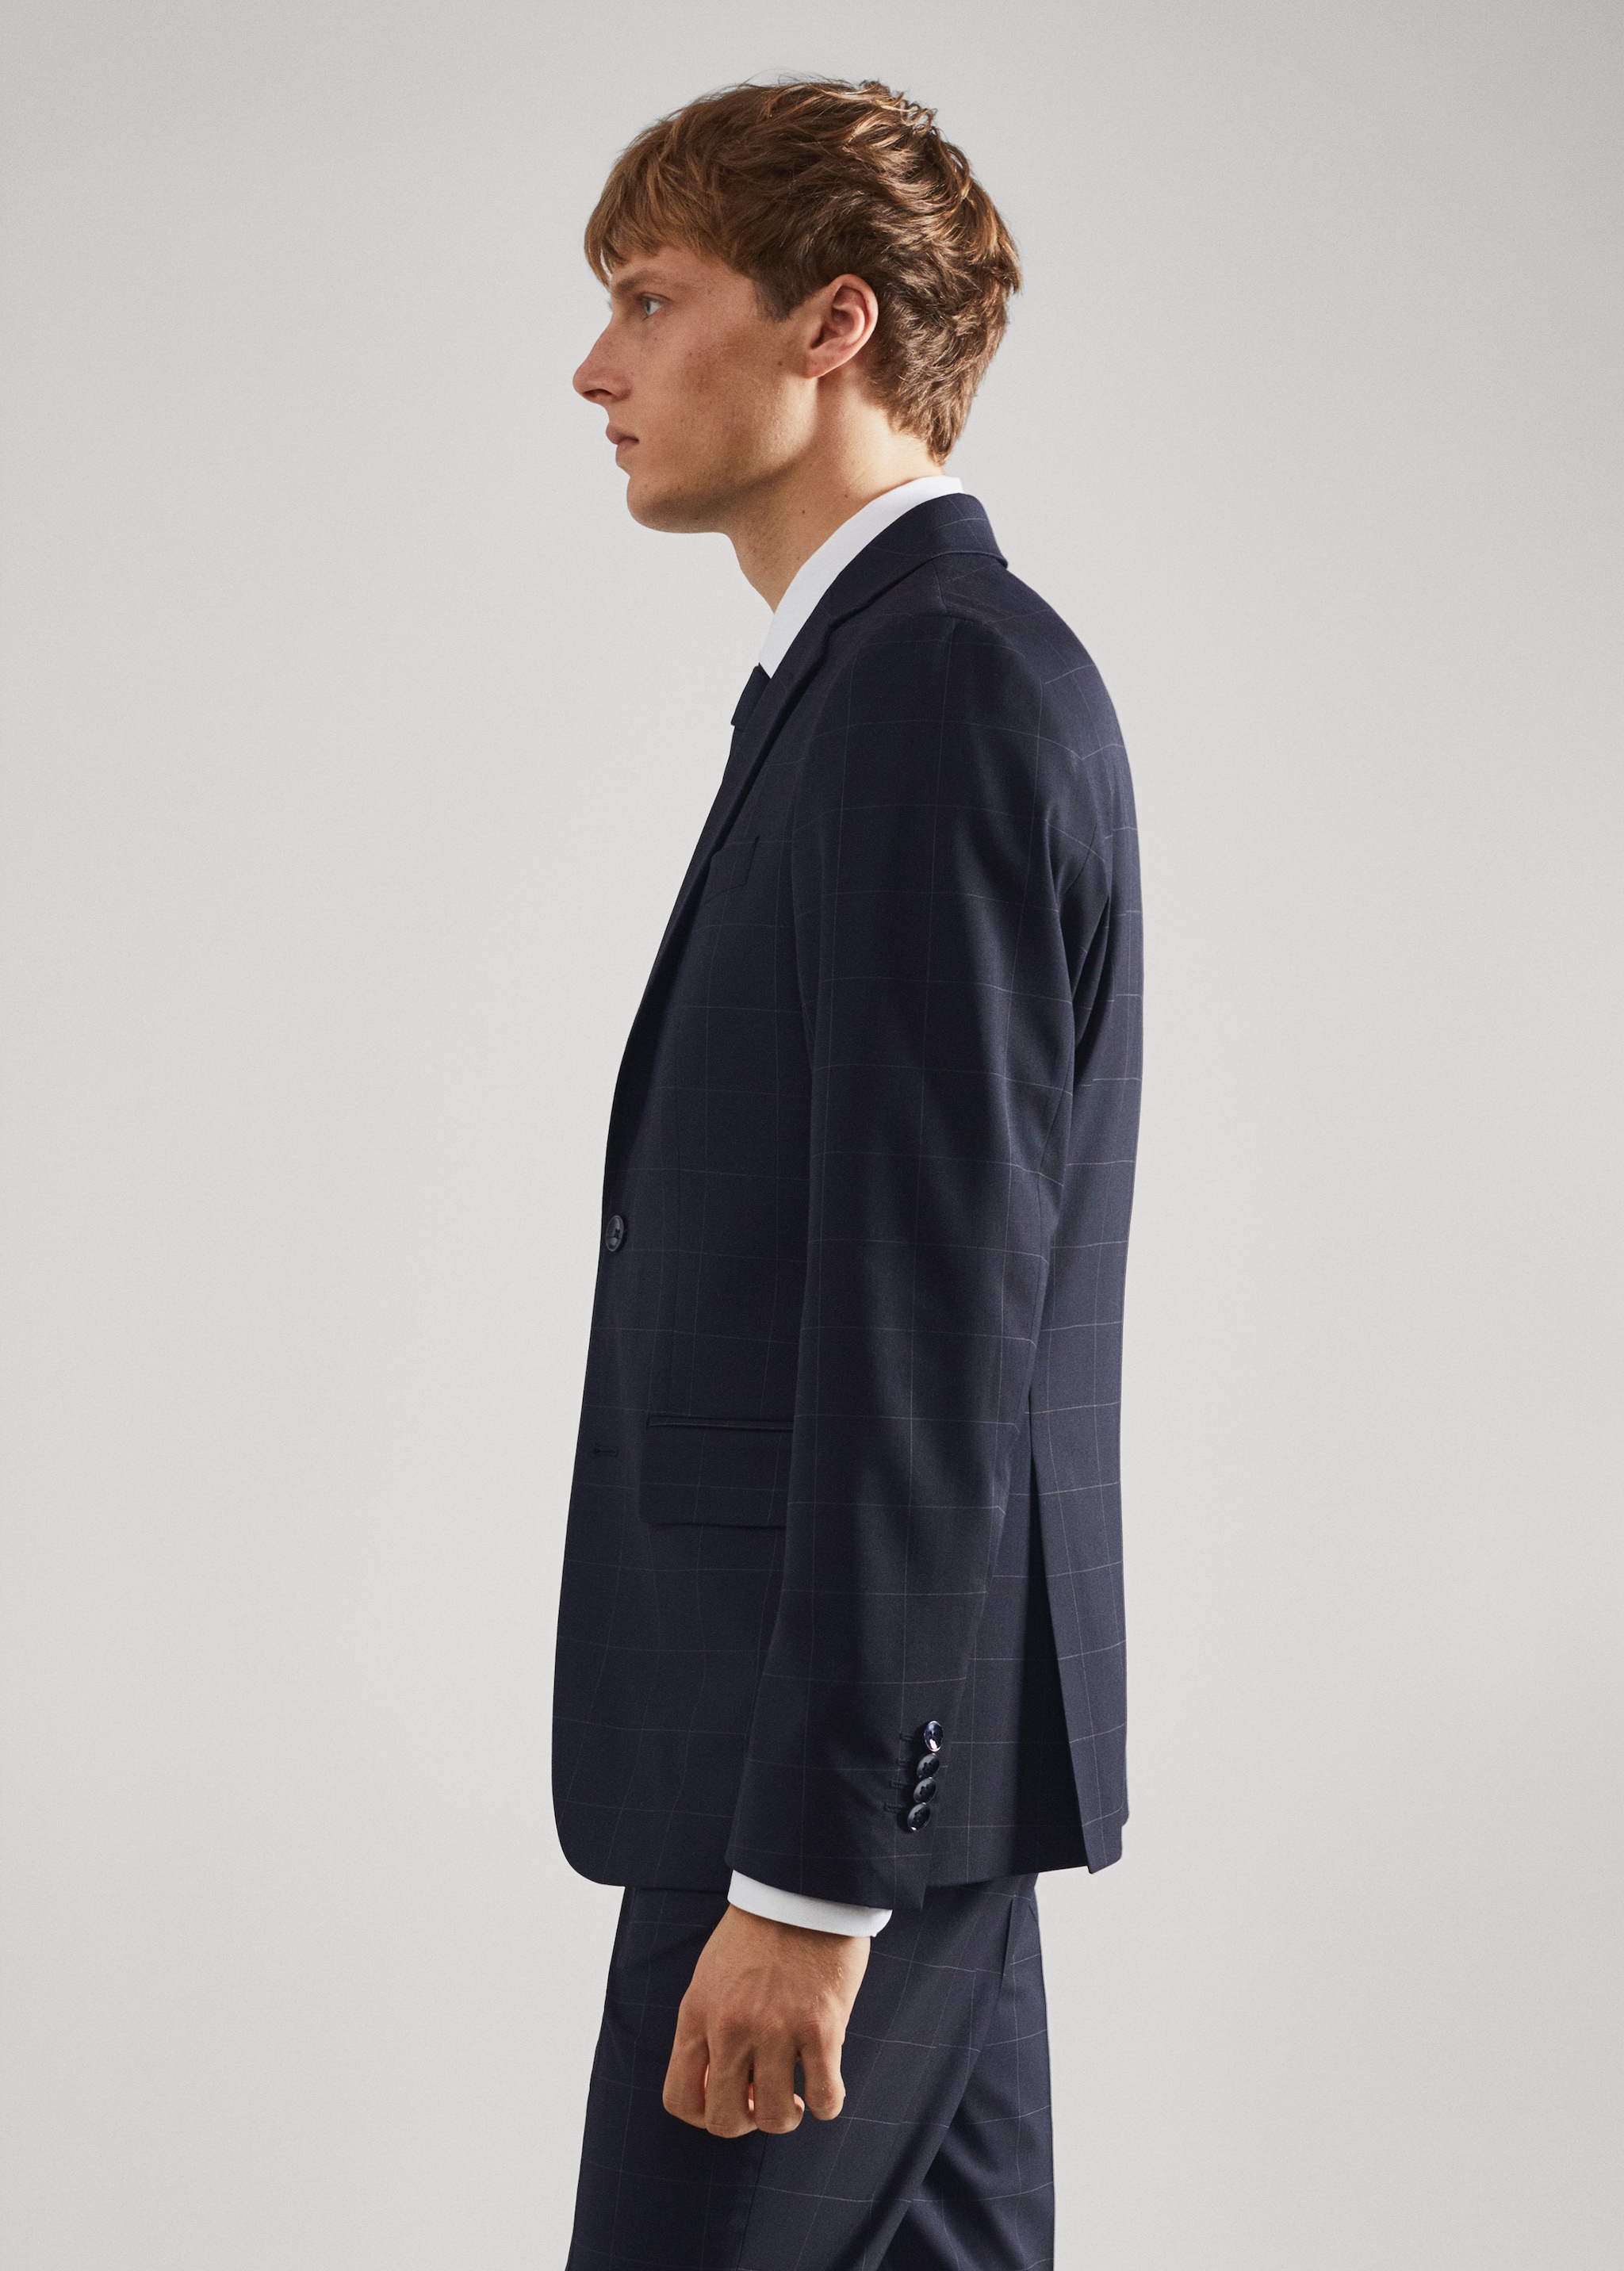 Slim-fit suit jacket - Details of the article 6